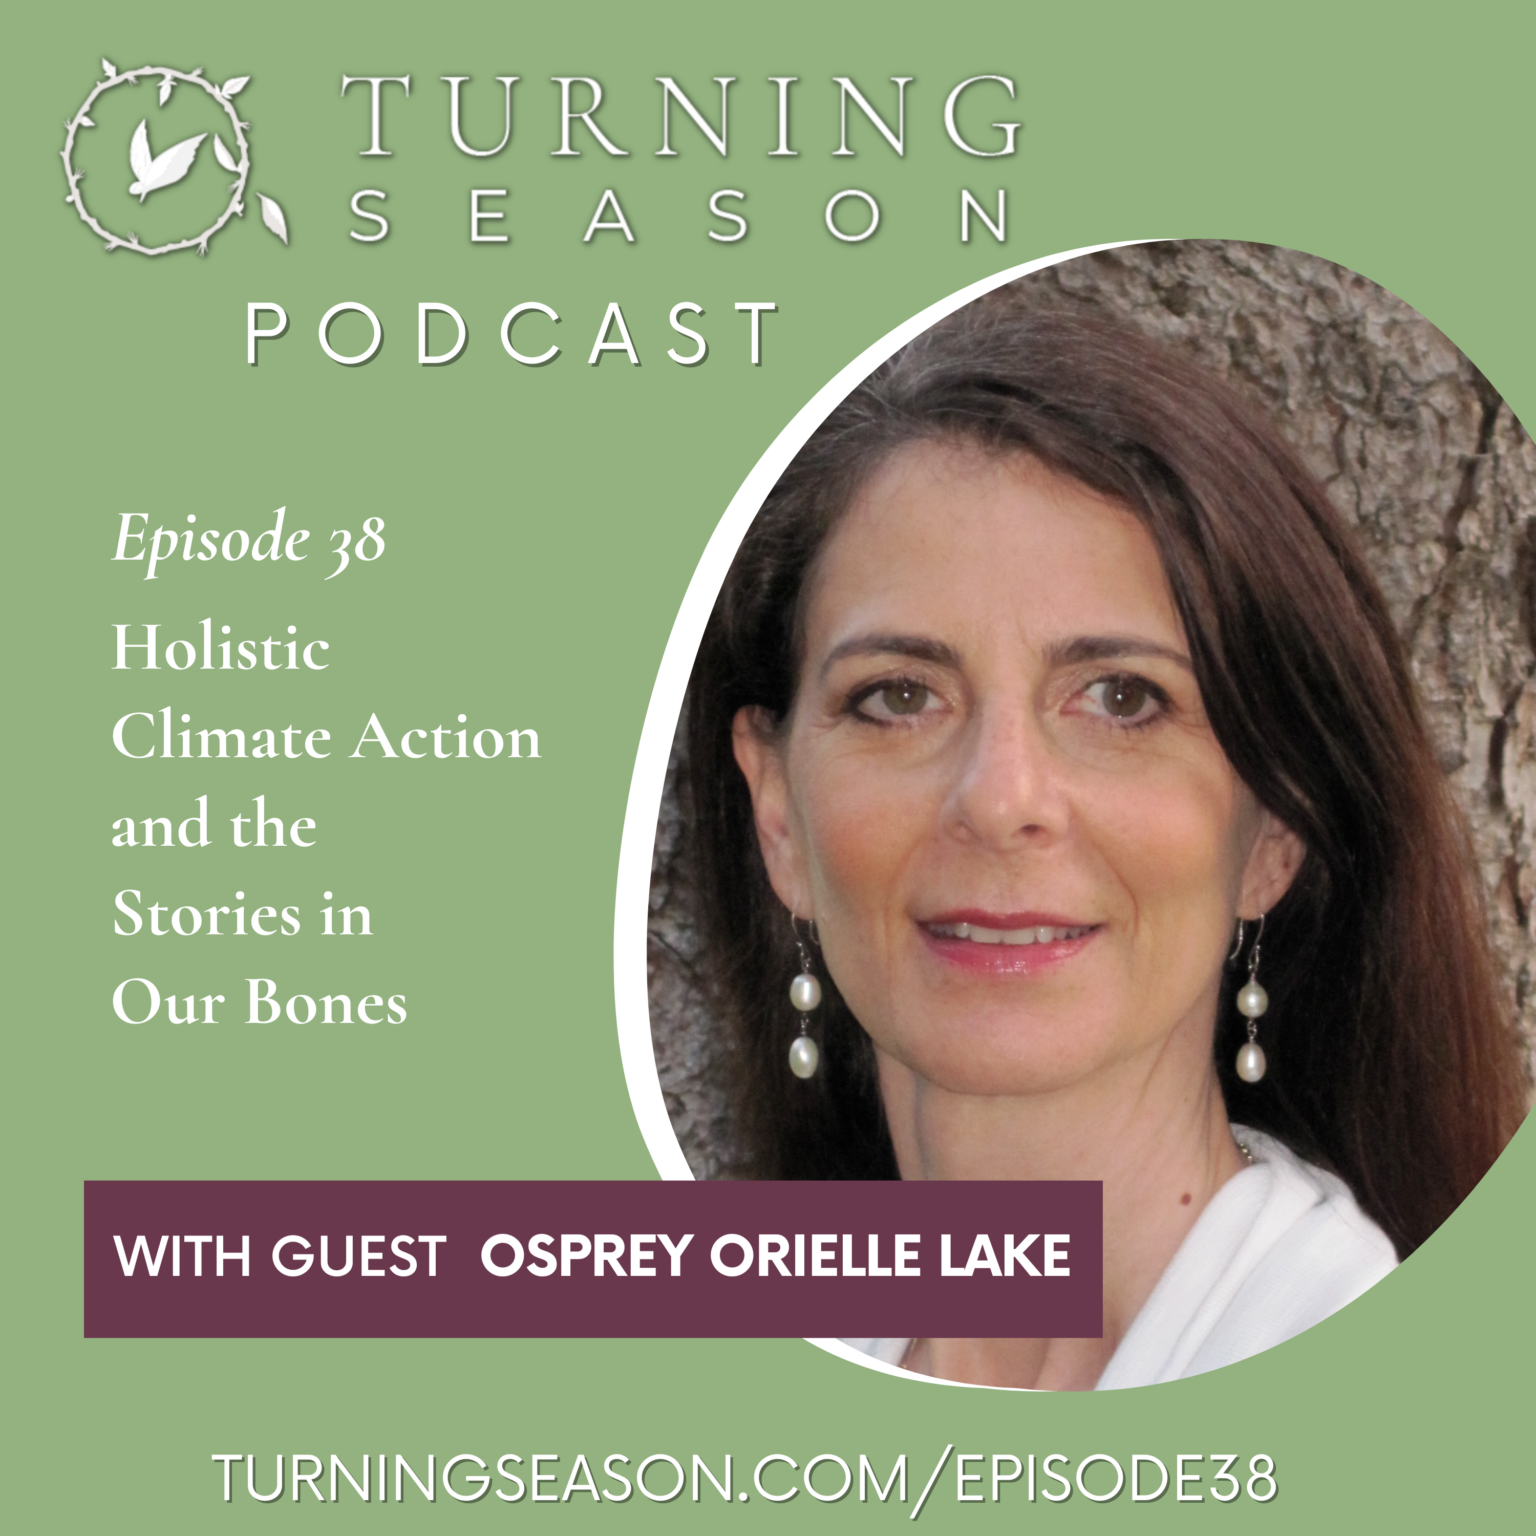 Turning Season Podcast Episode 38 with Osprey Orielle Lake hosted by Leilani Navar turningseason.com